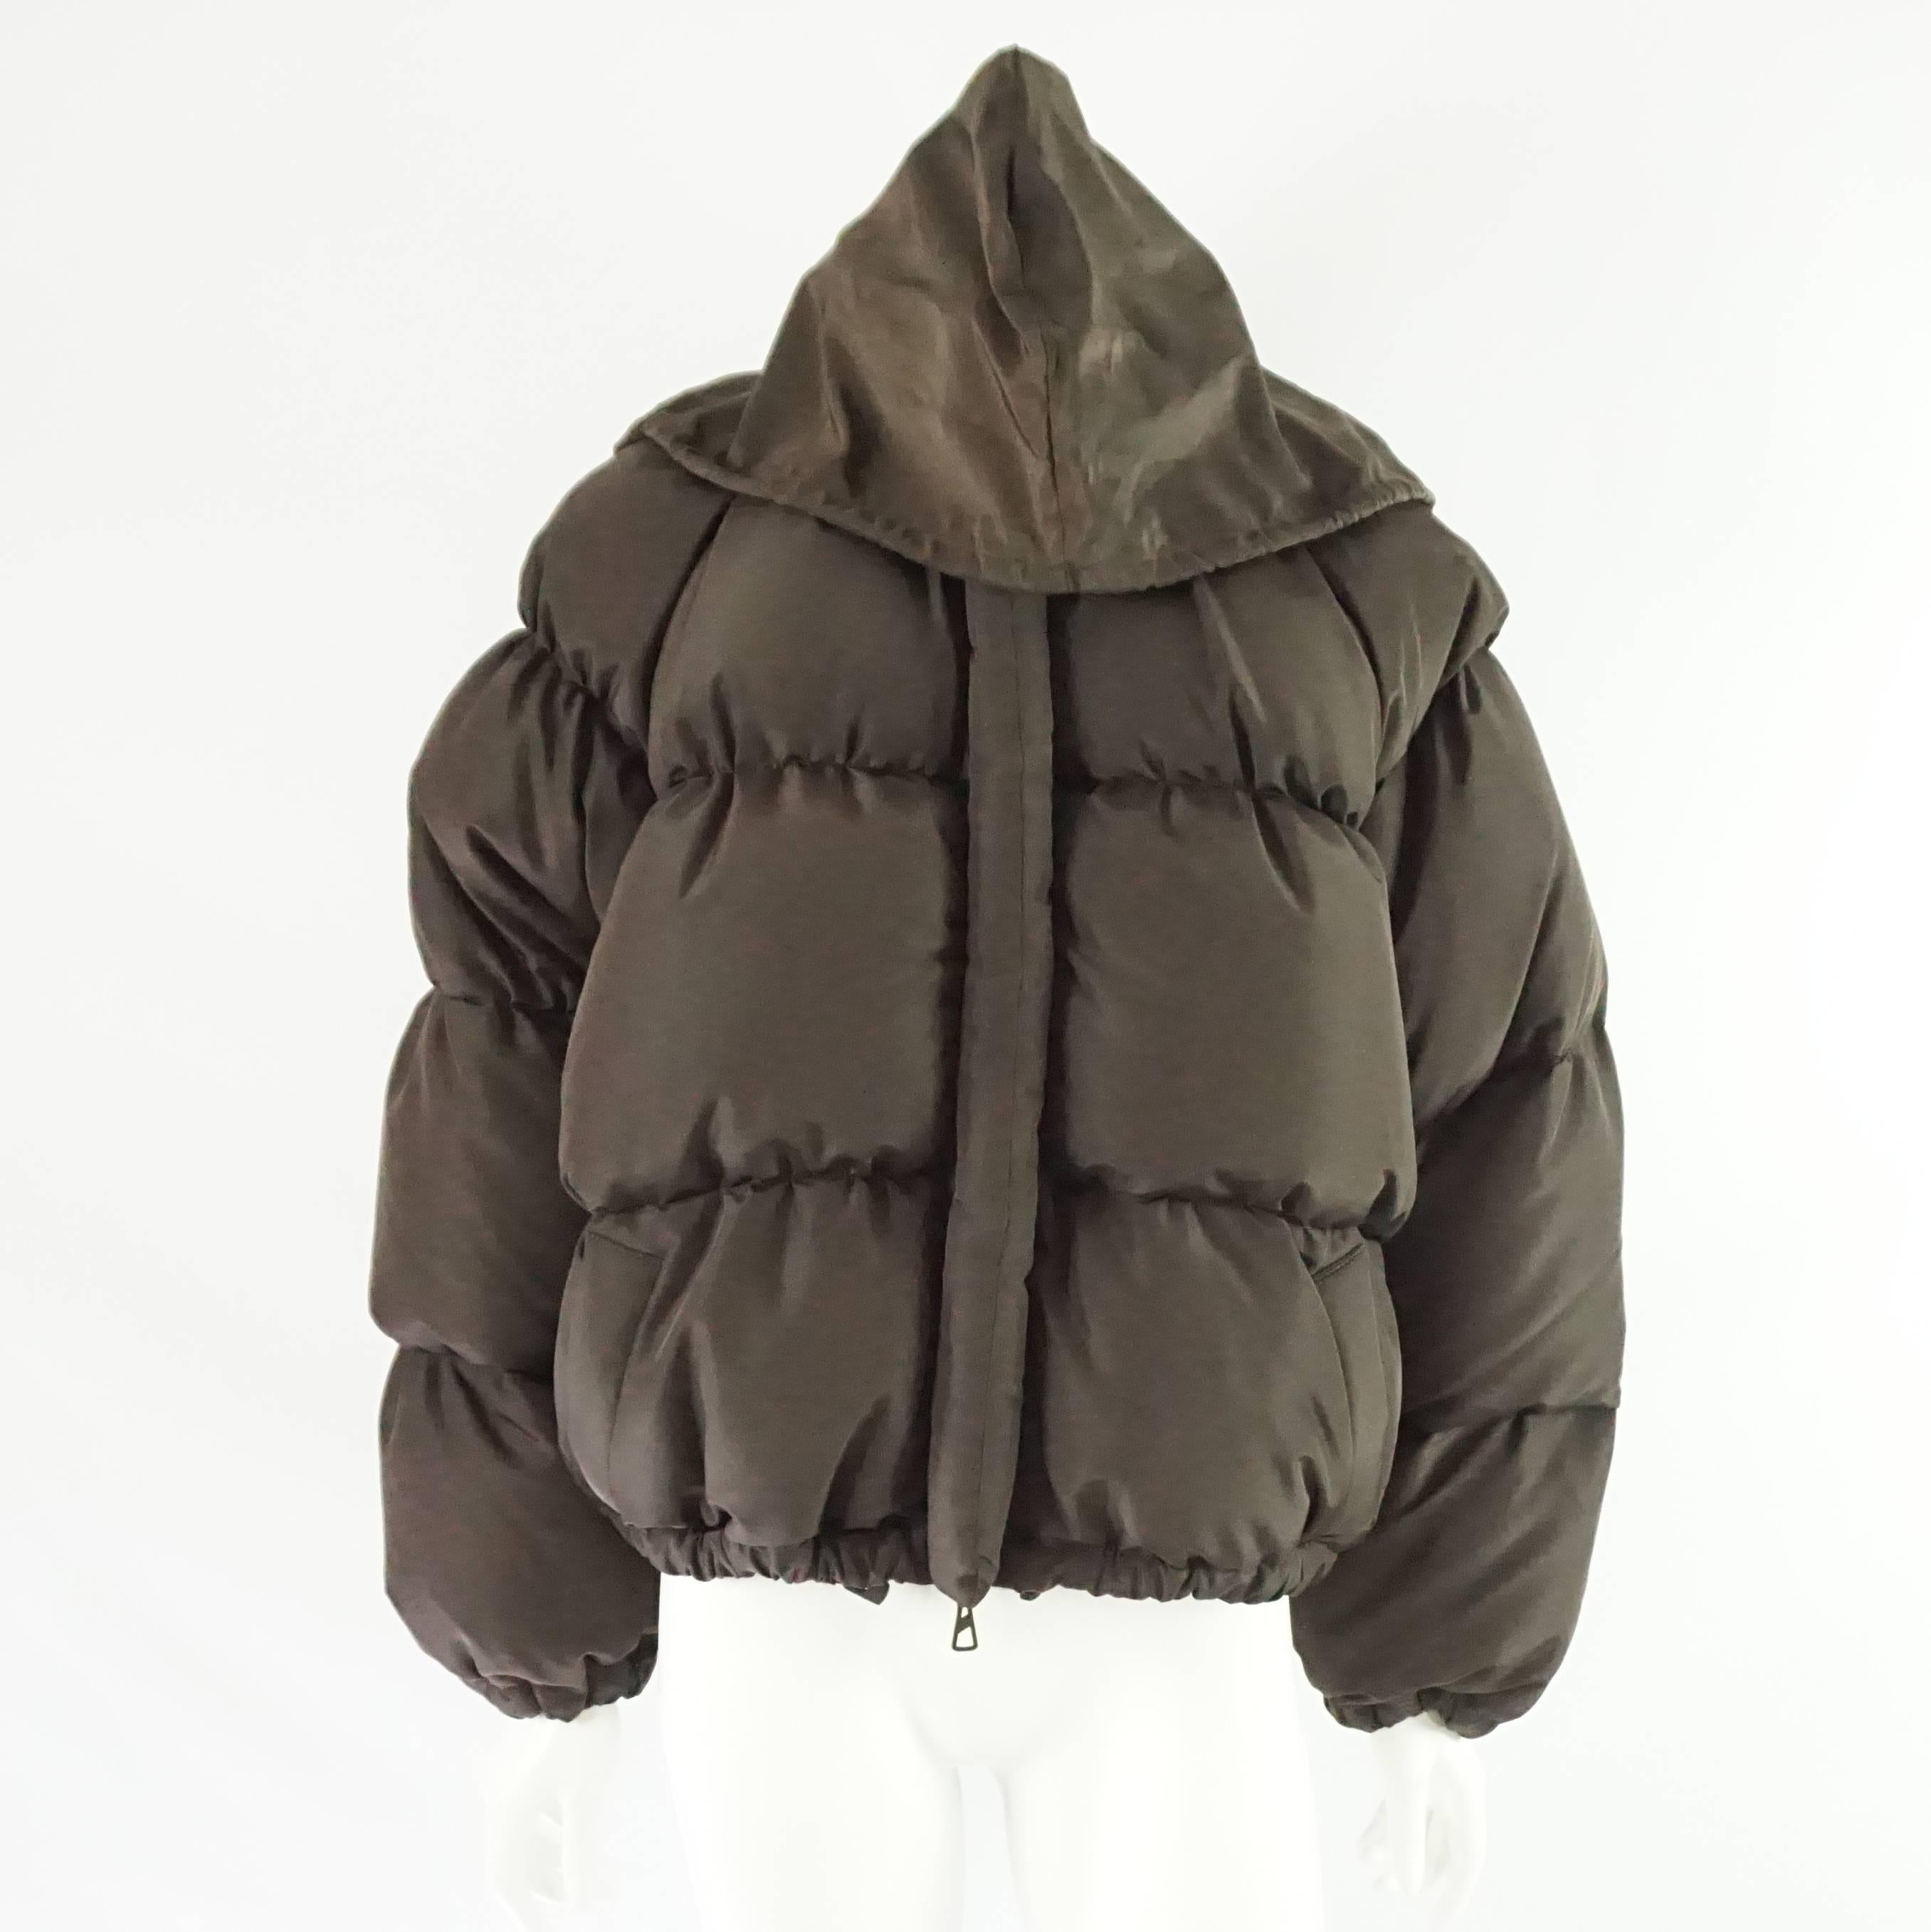 jean paul jacket price